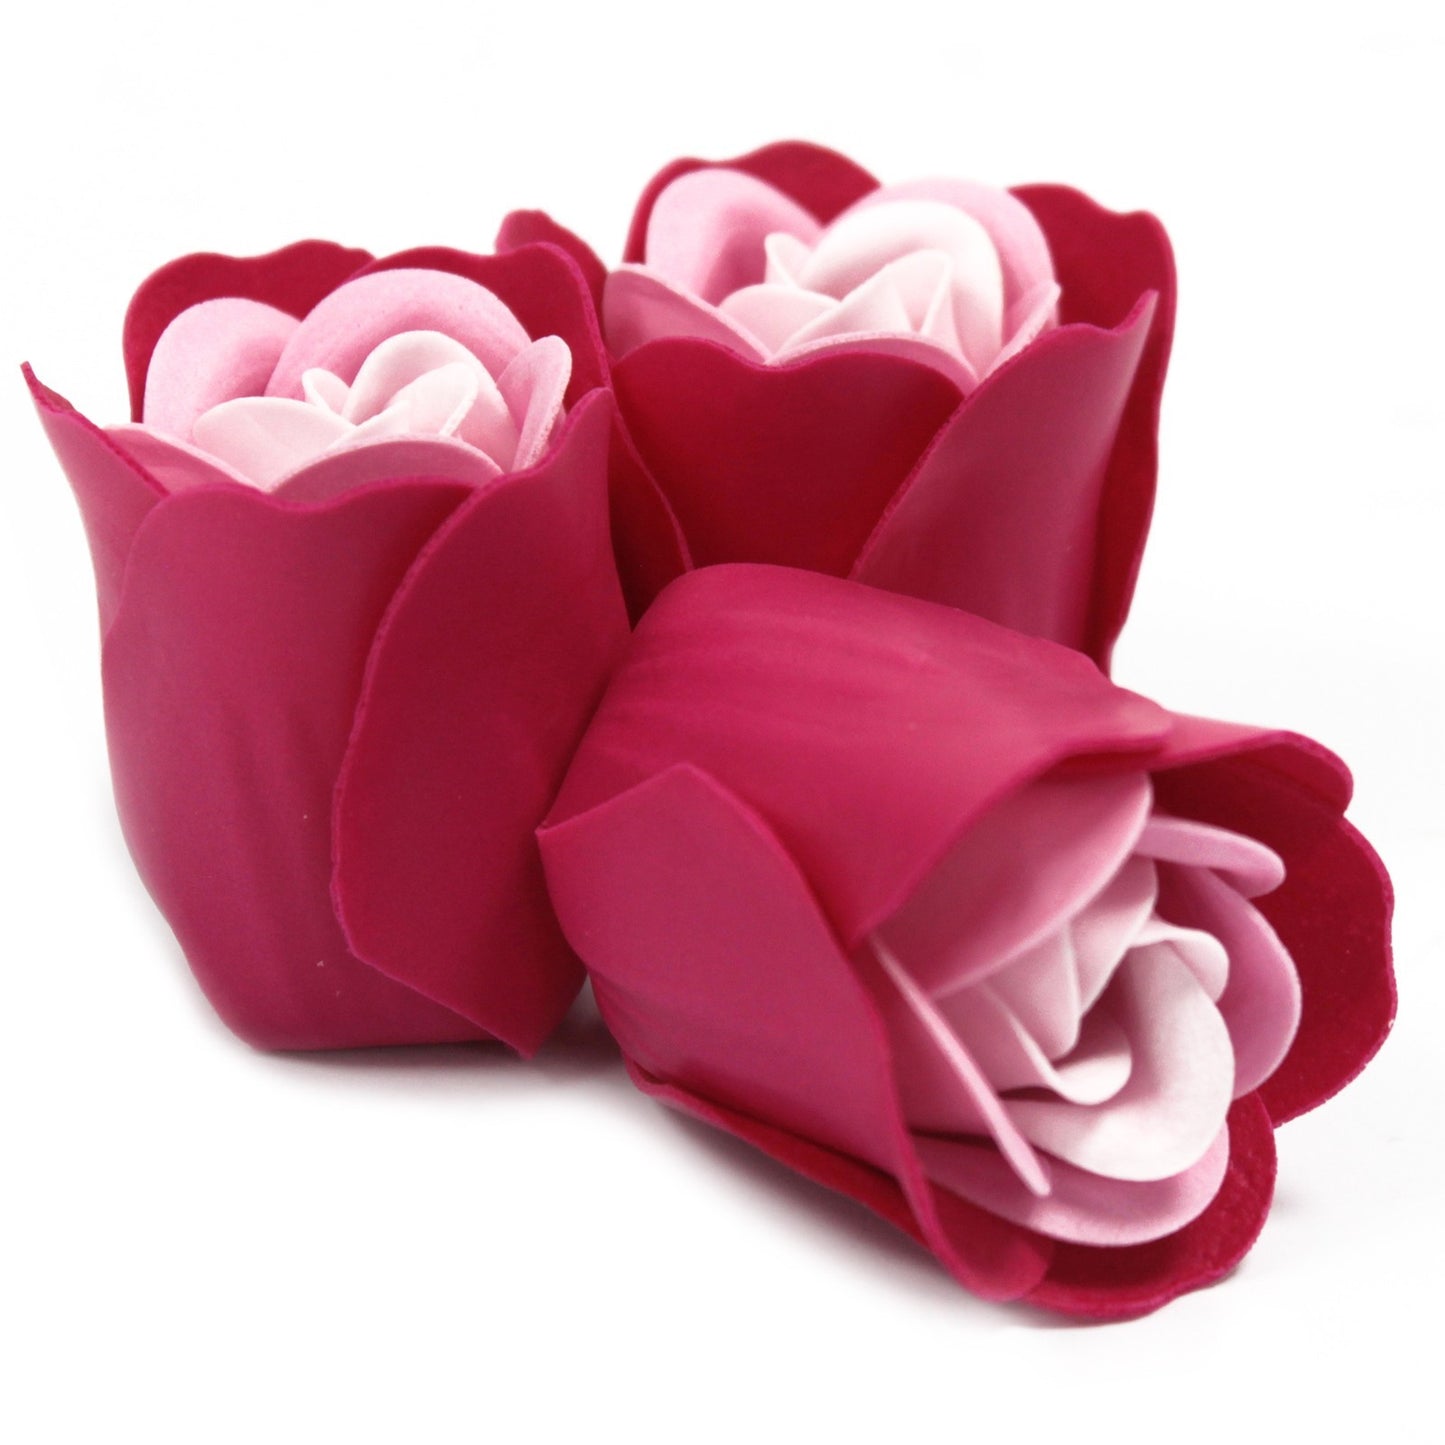 Set of 3 Soap Flower Heart Box - pink Roses